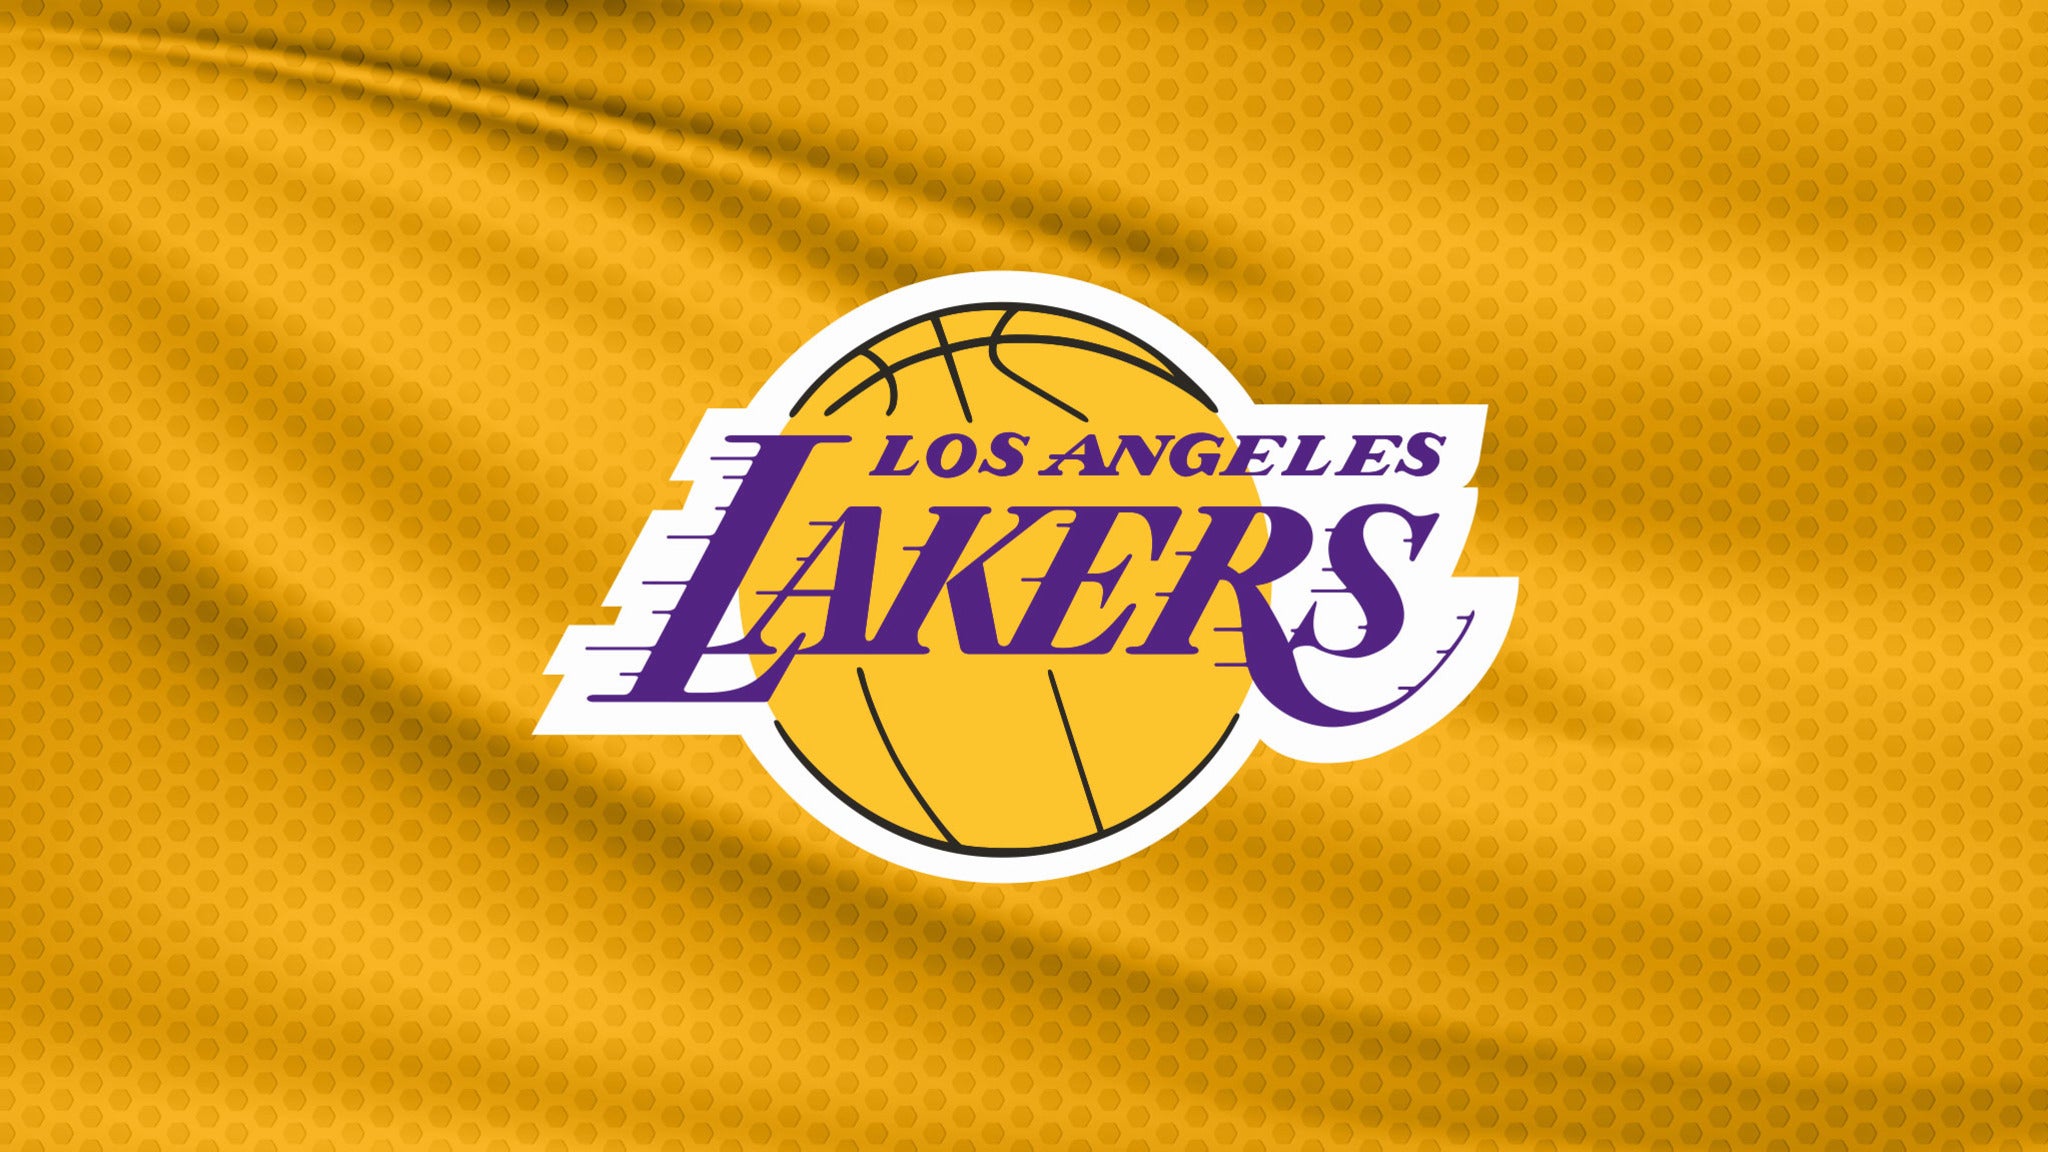 Los Angeles Lakers vs Dallas Mavericks